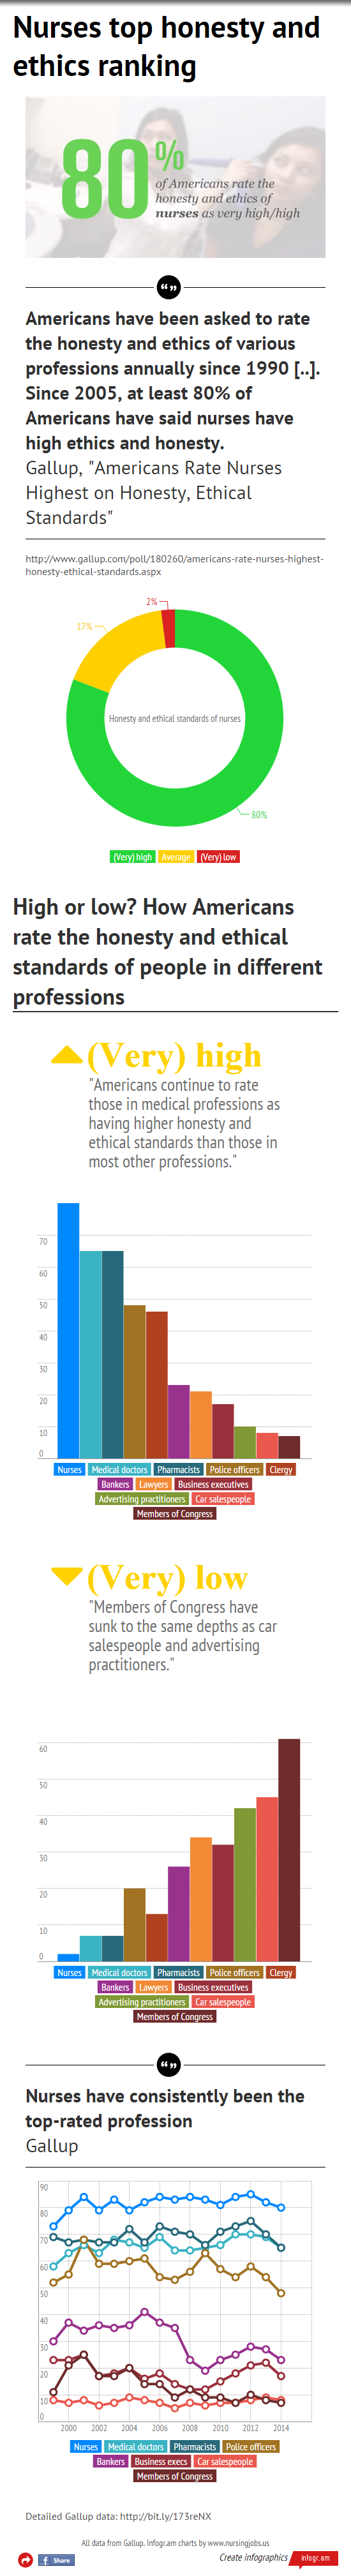 Nurses top honesty and ethics ranking: Infographic